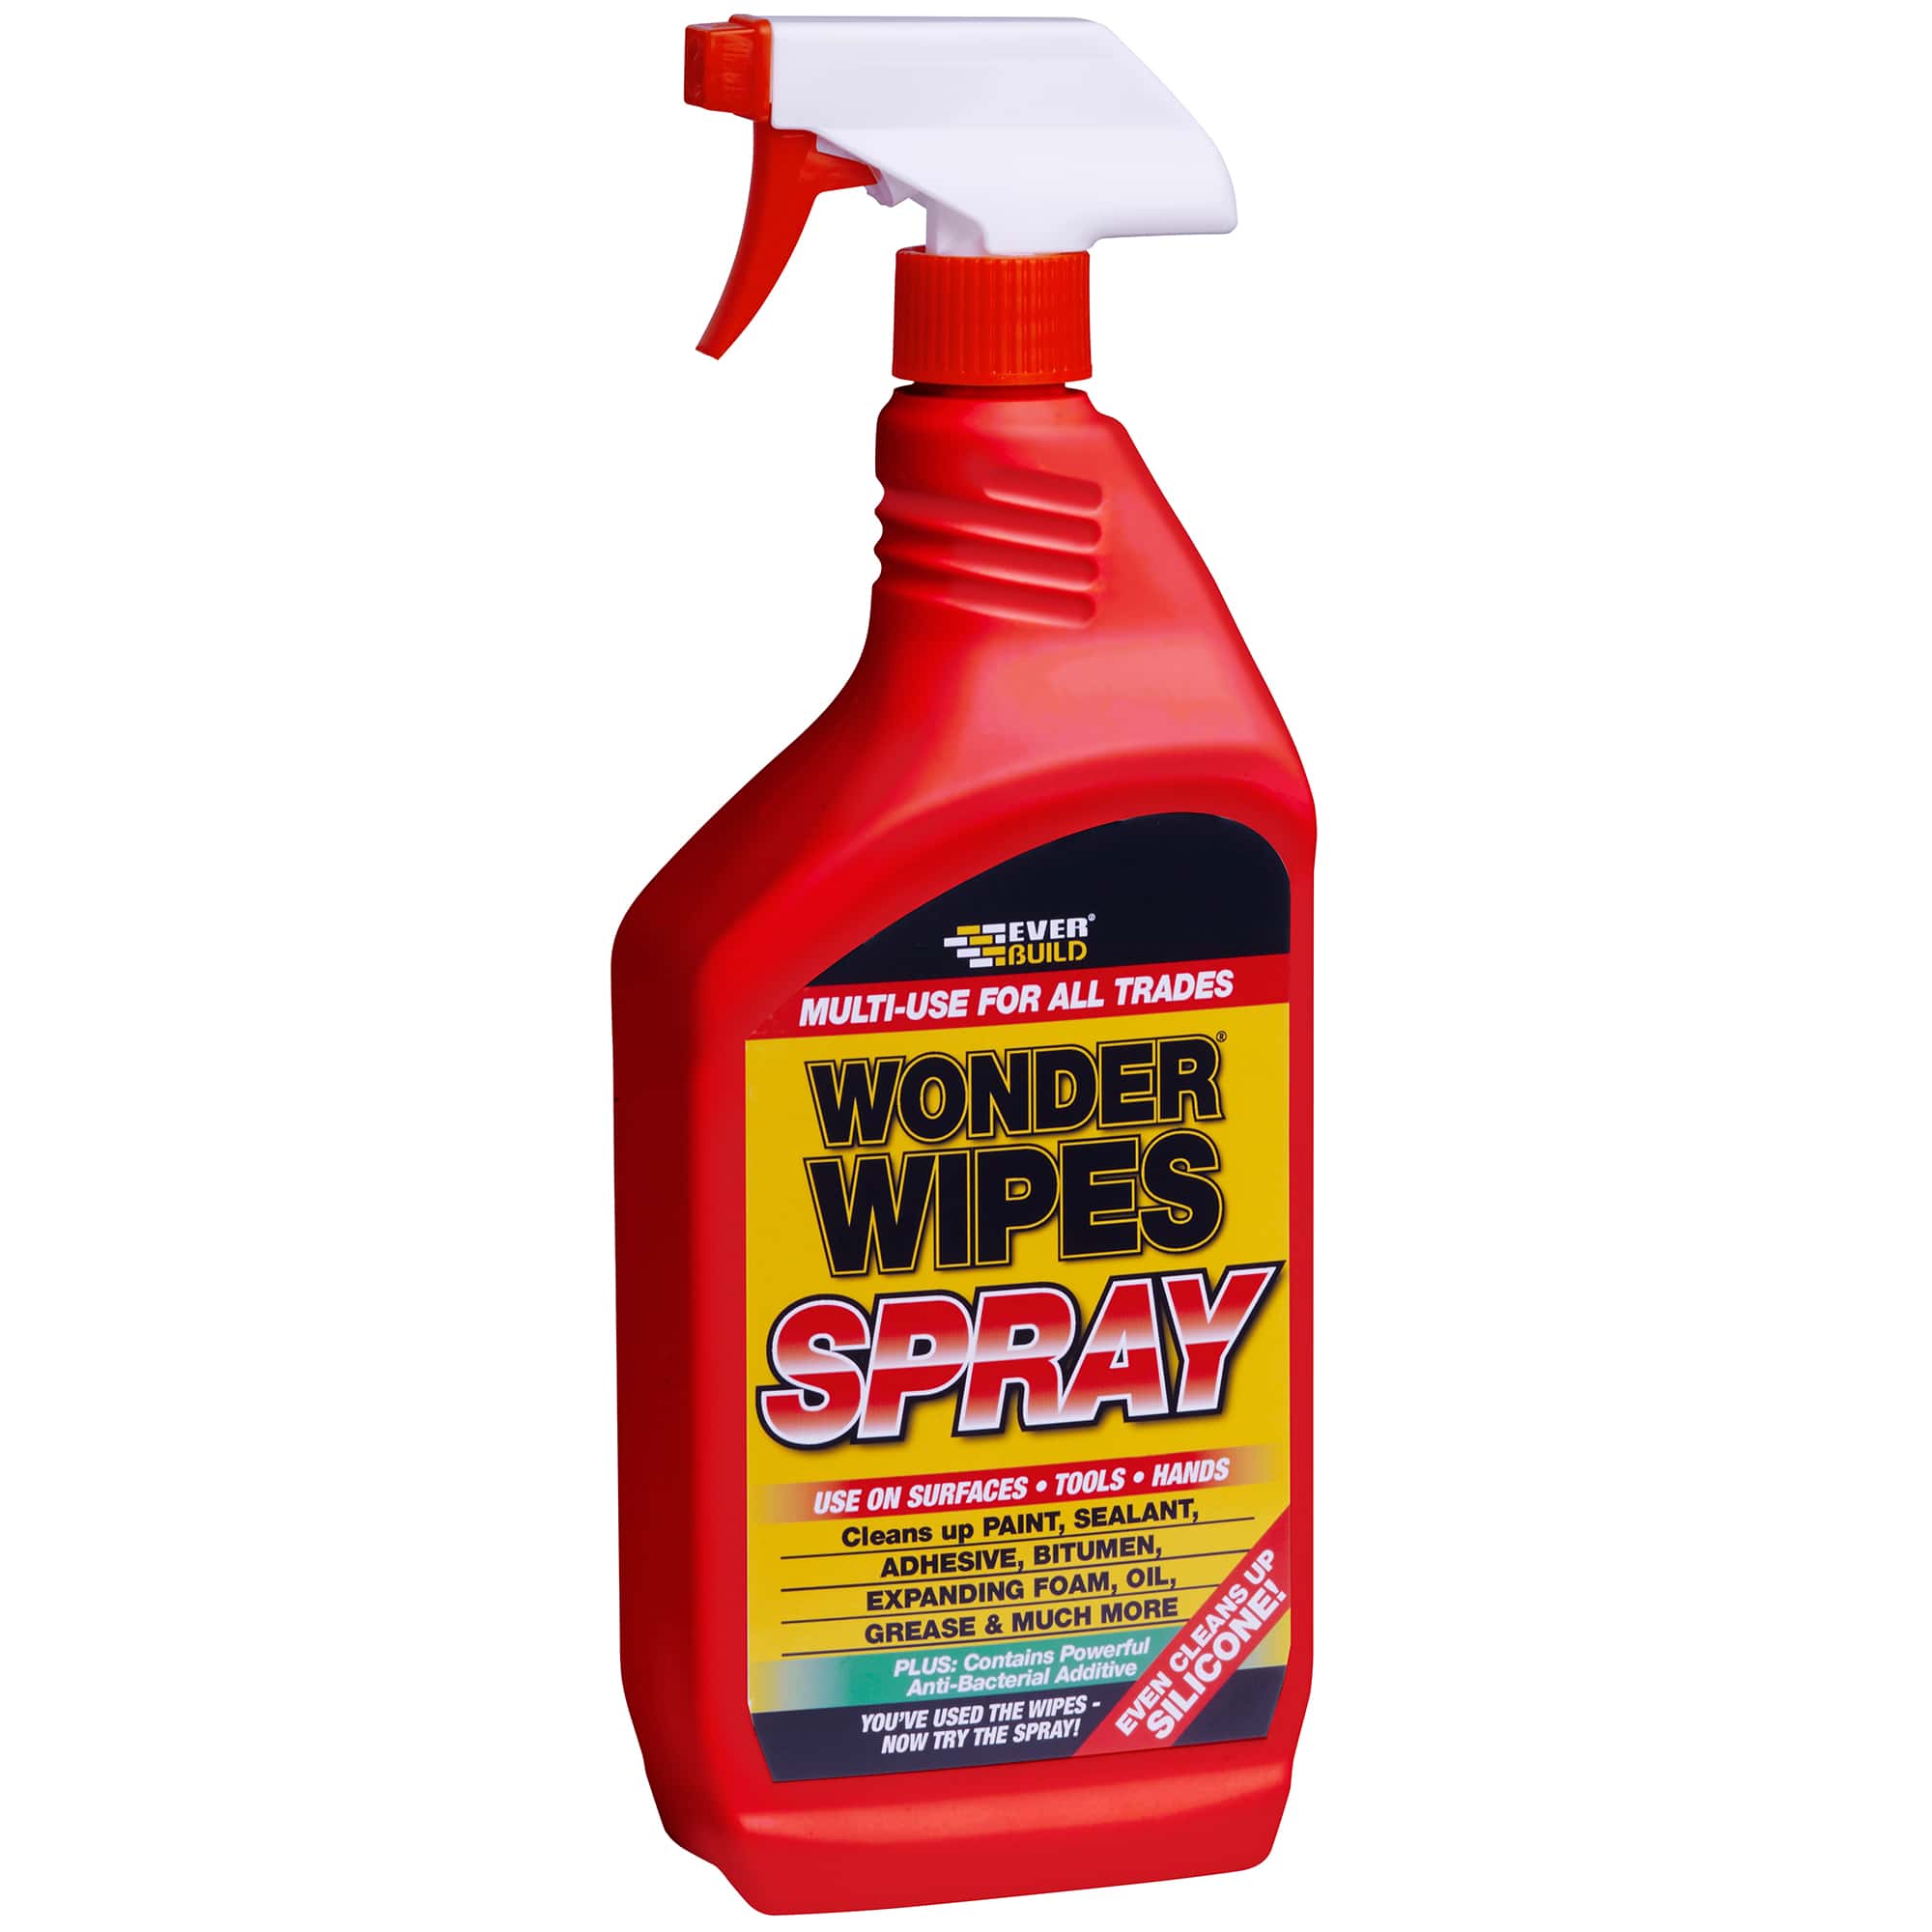 everbuild multi use wonder wipes spray bottle clean paint sealant adhesive bitumen oil grease